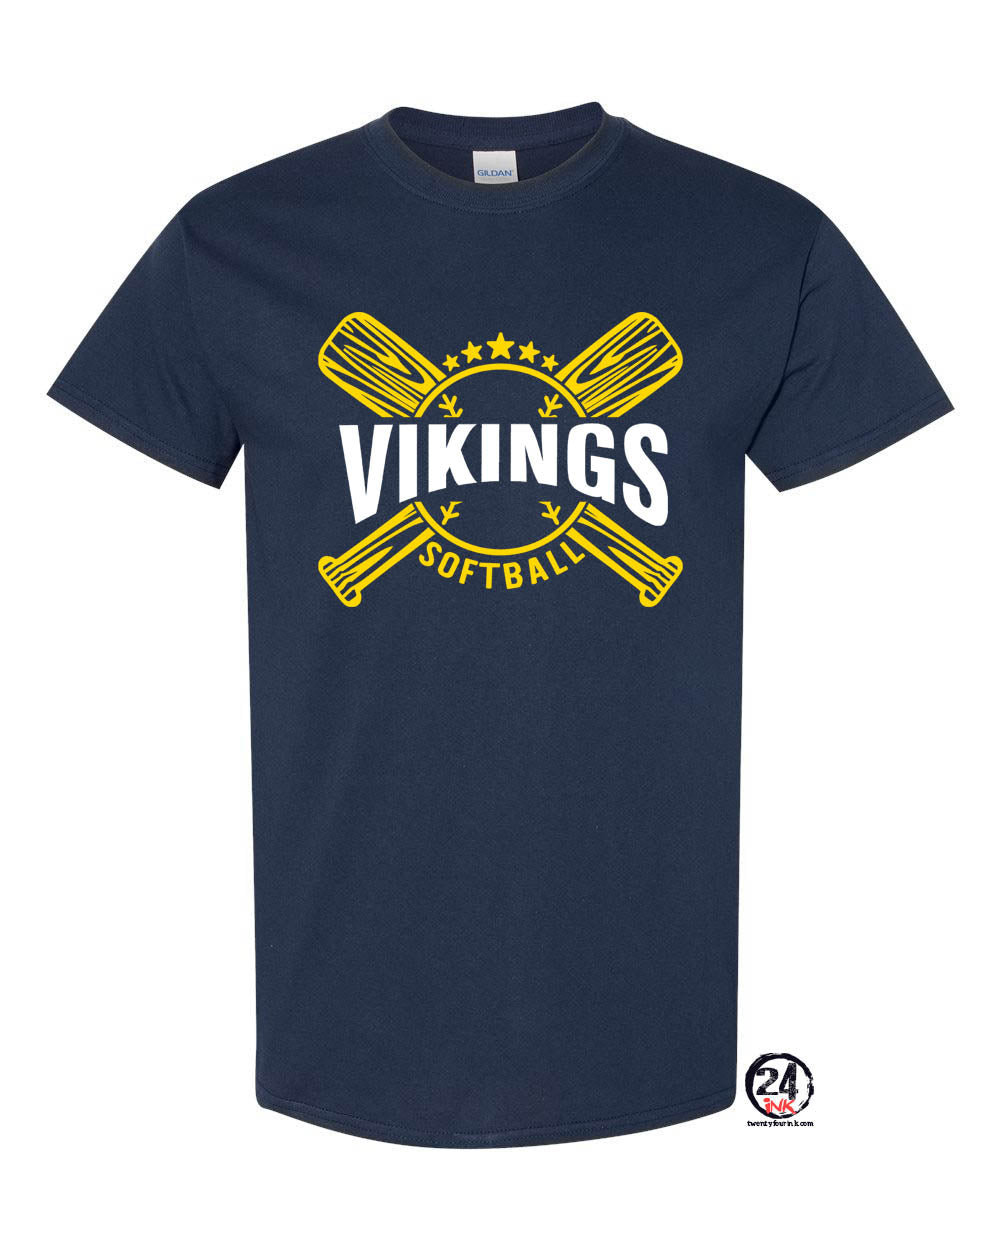 Vikings Bats Softball t-Shirt